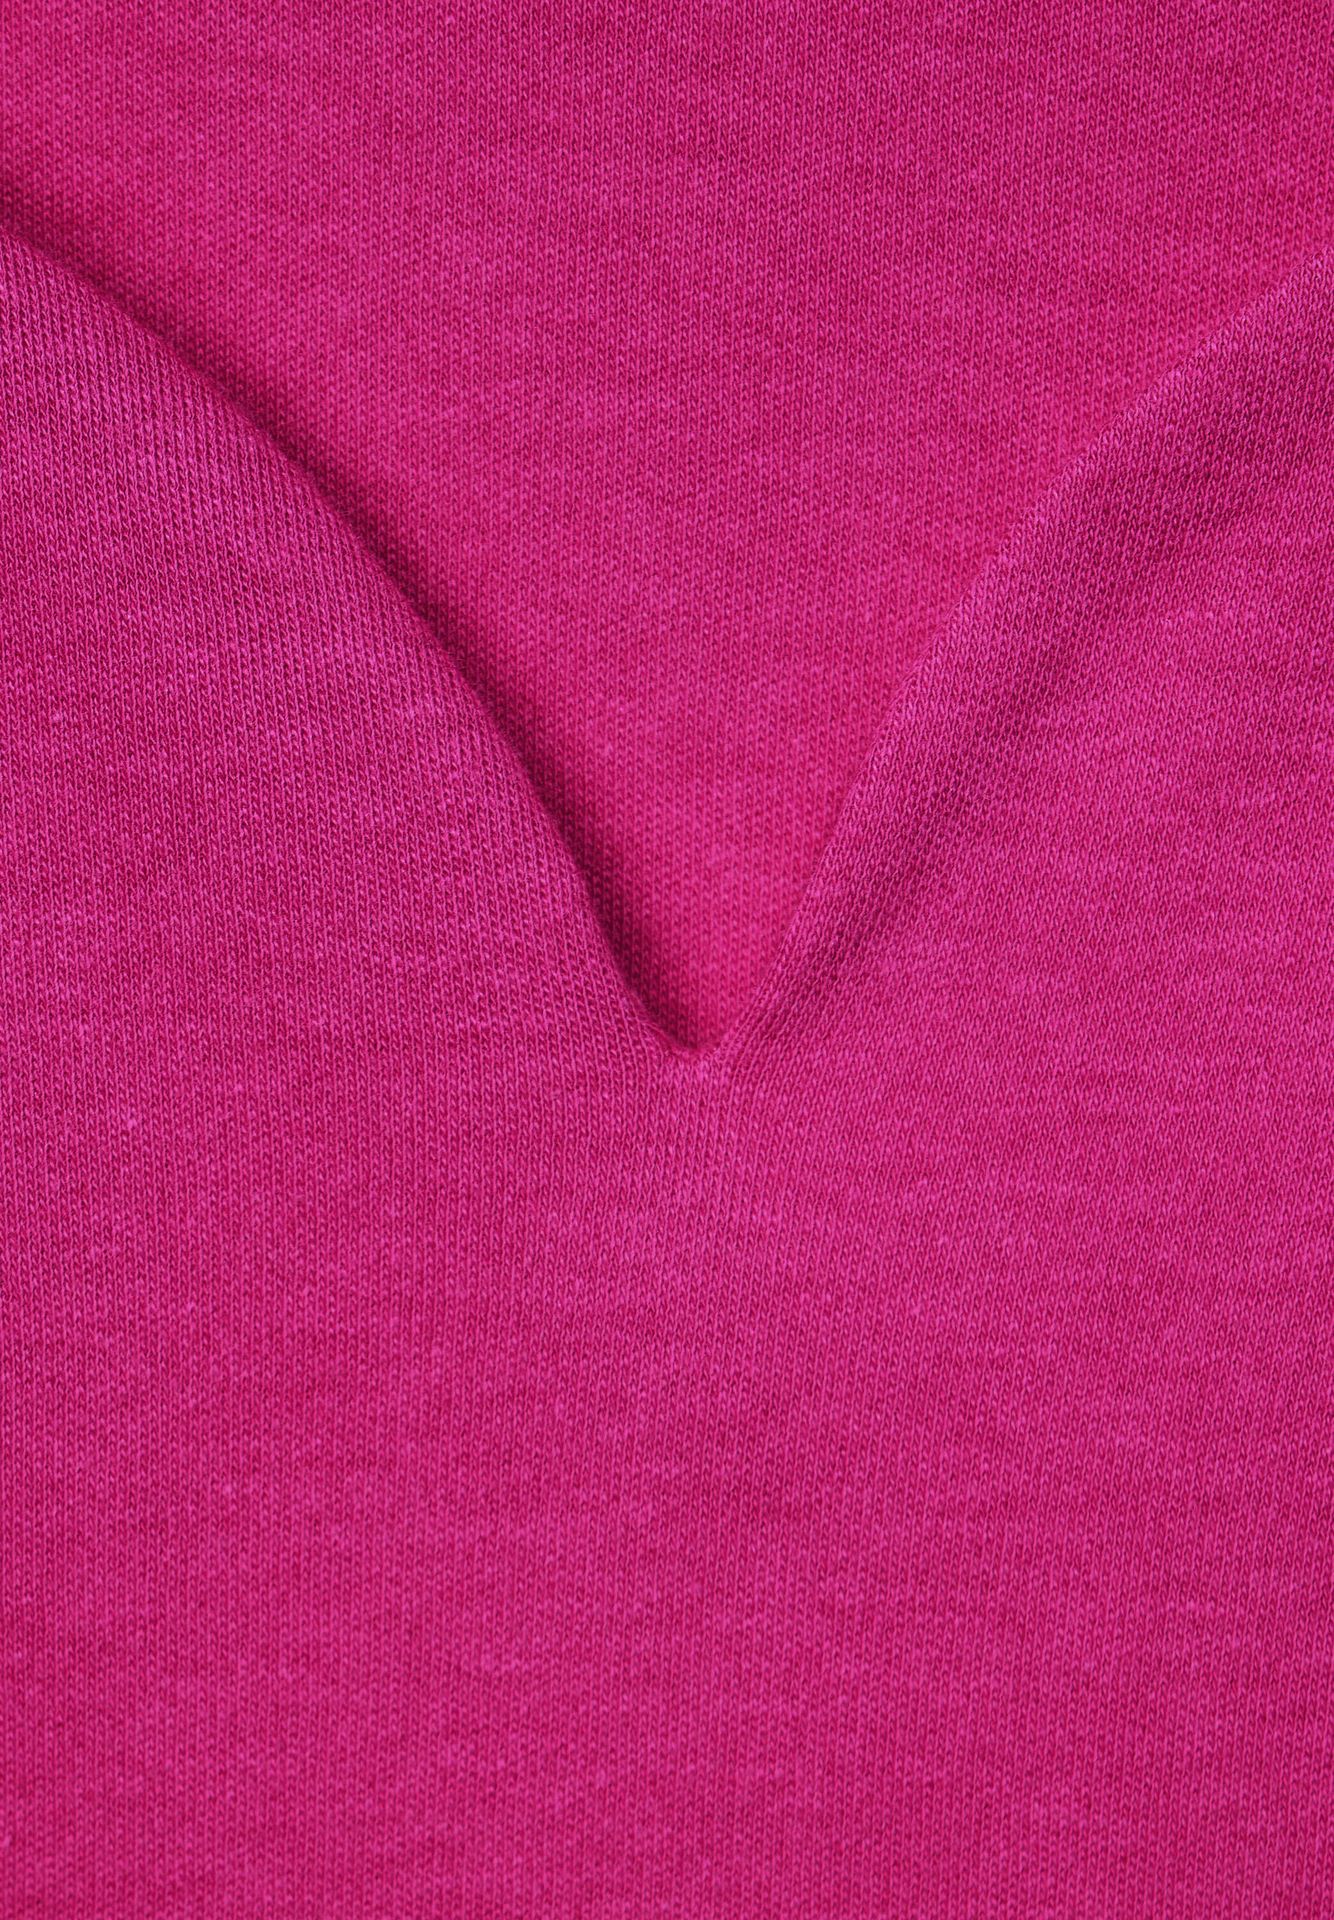 Street-One A321277 QR shirt w.heart neckline s magnolia pink 2900146659026